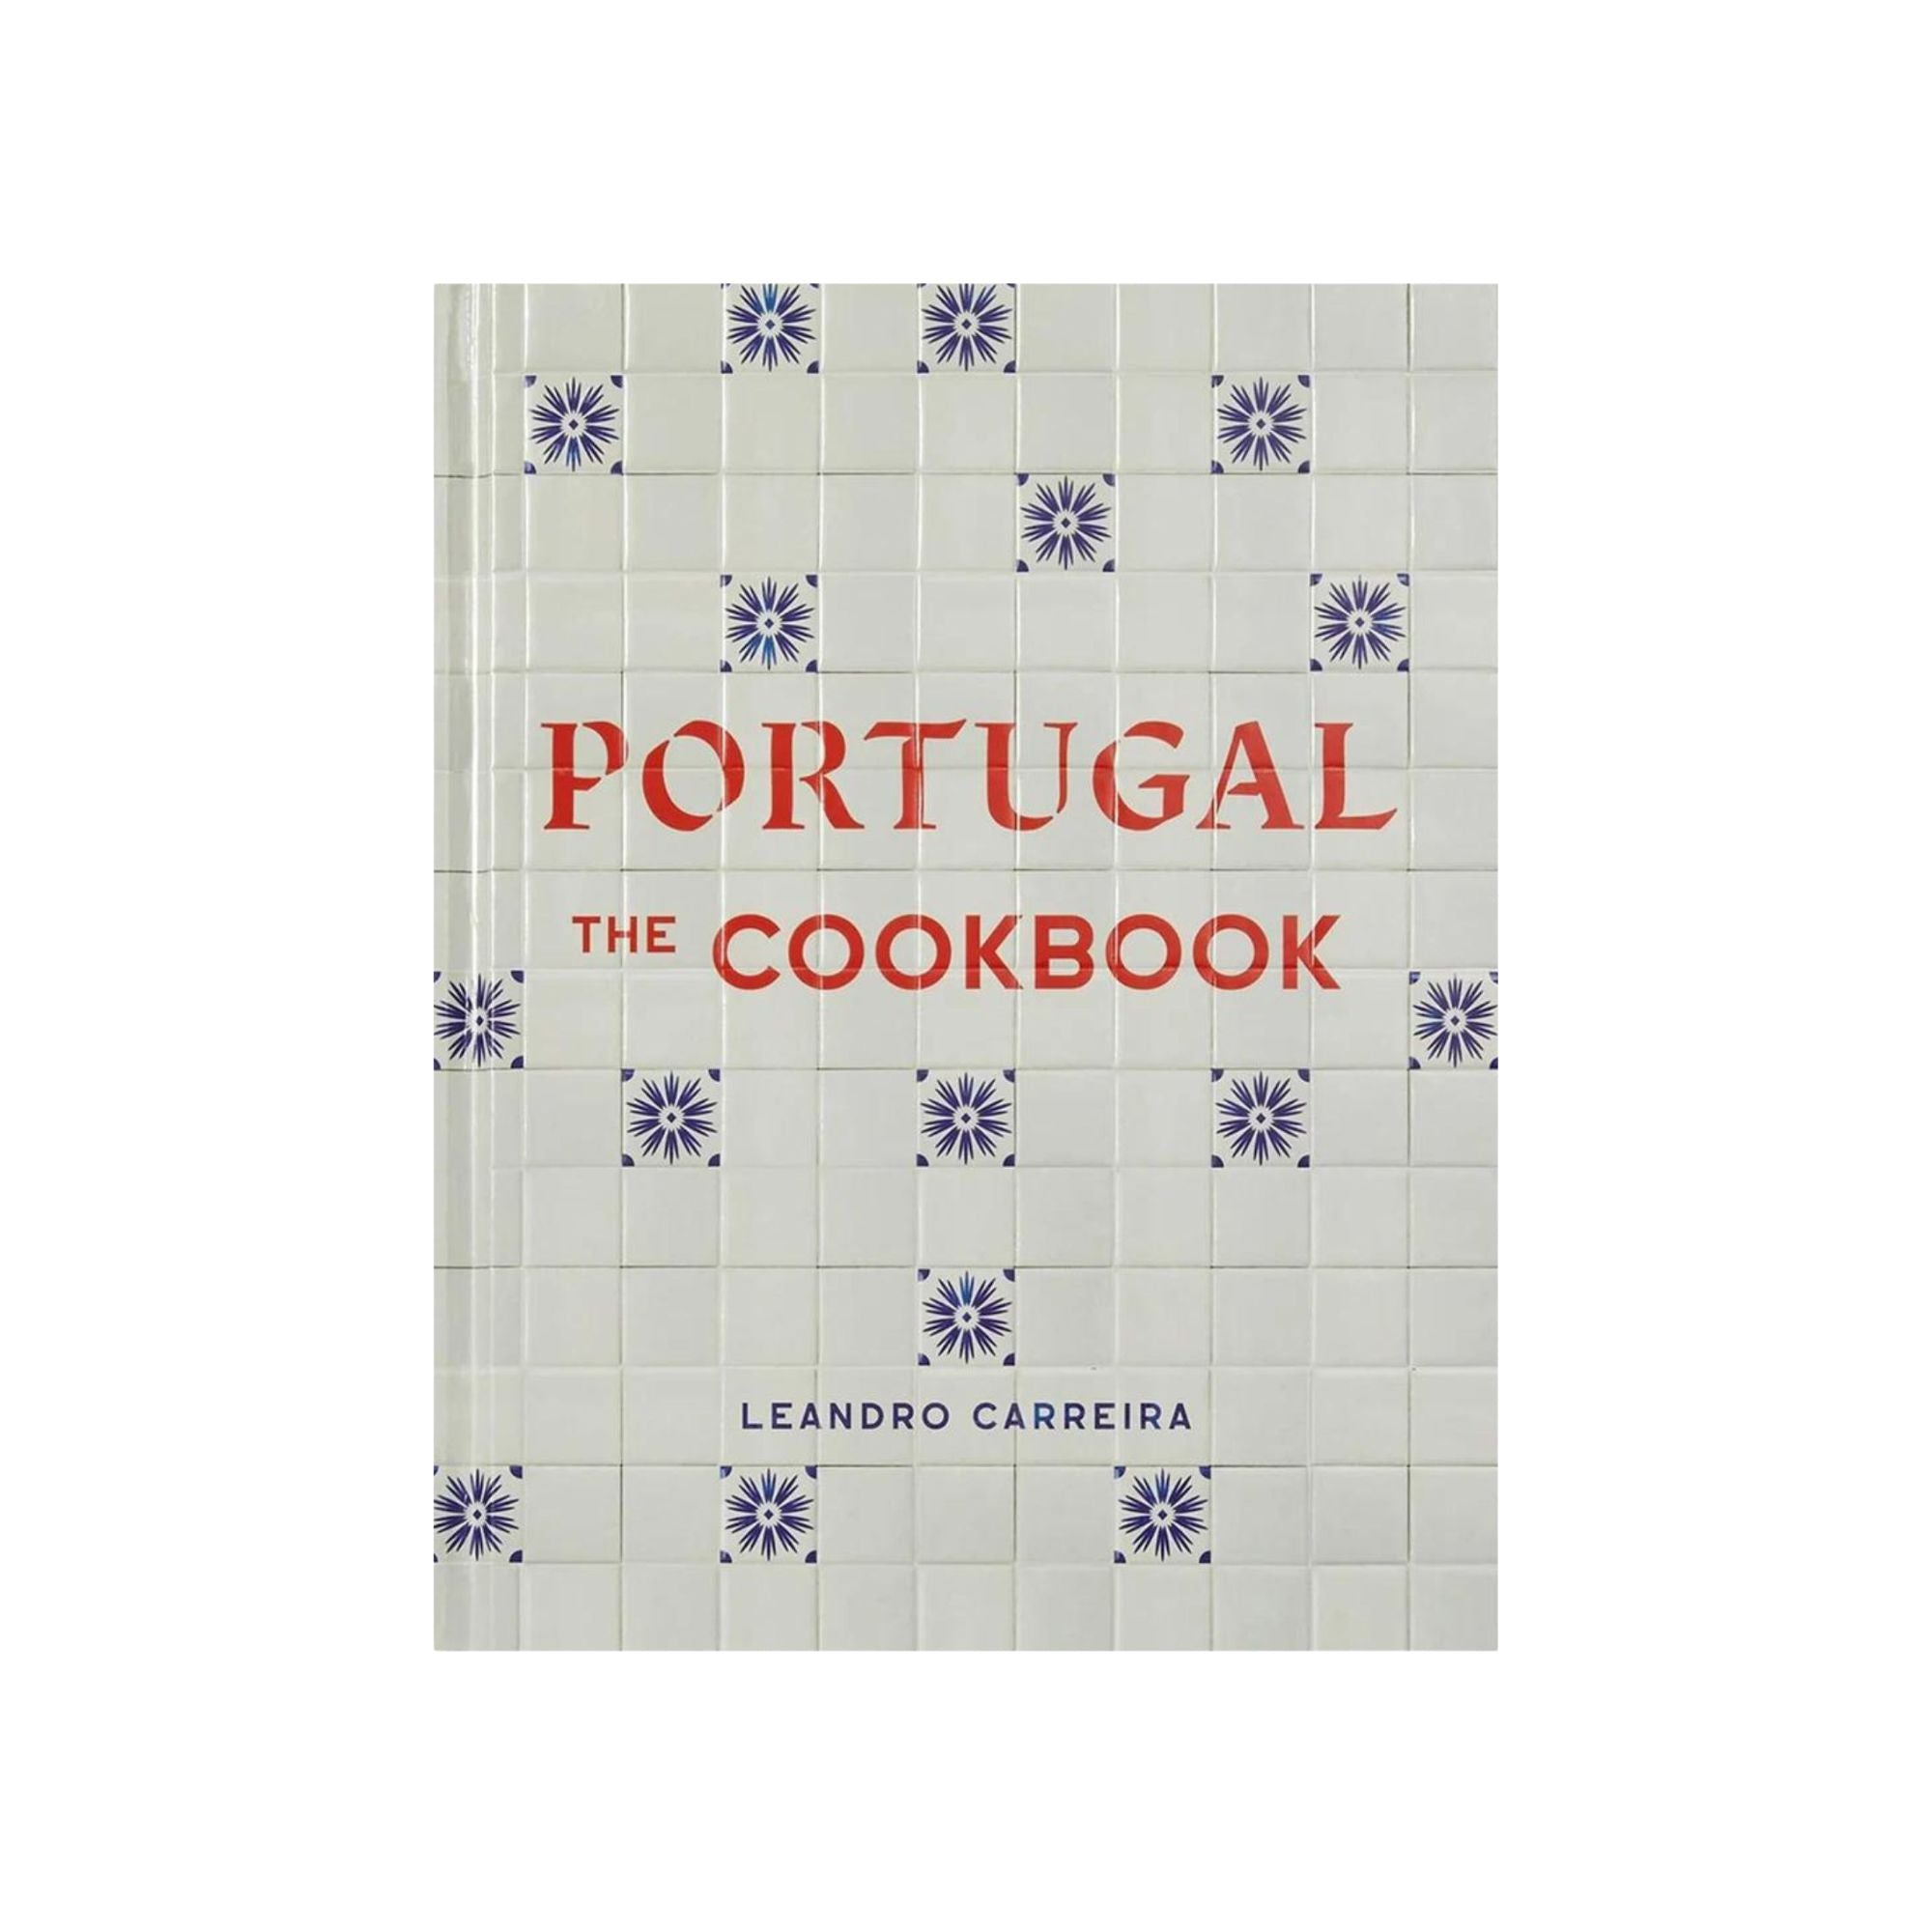 Portugal: The Cookbook